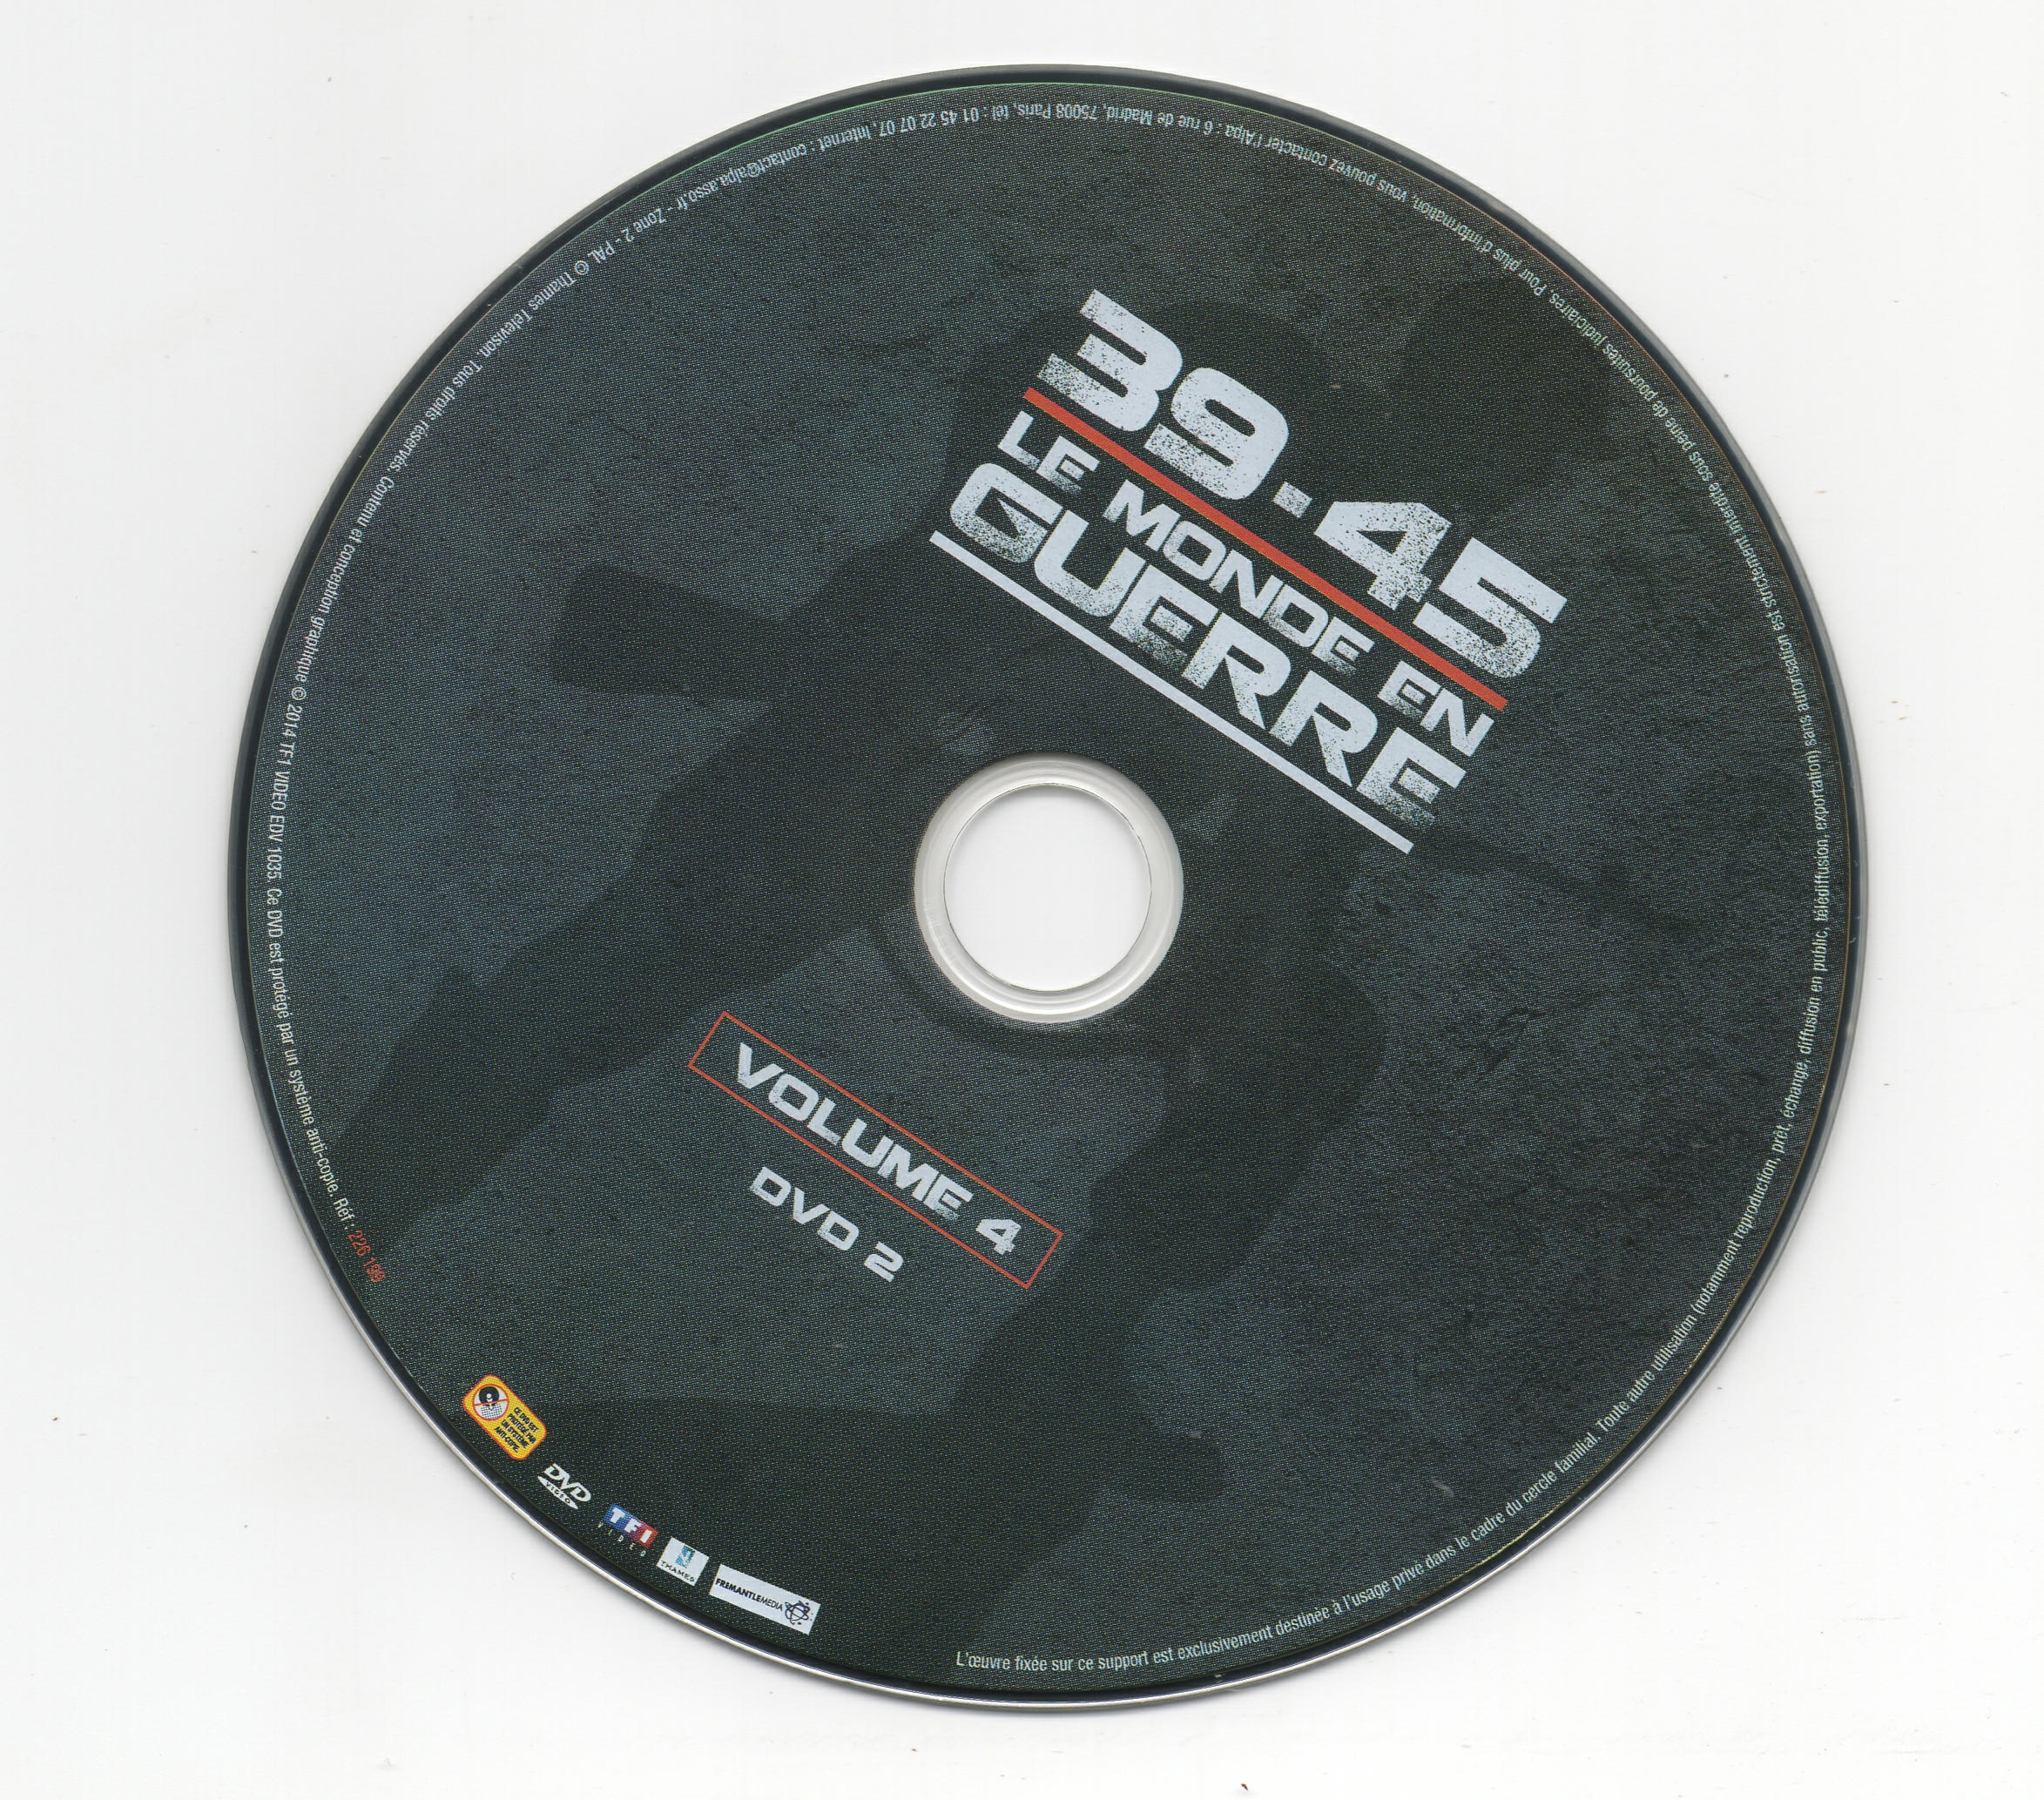 39-45 Le monde en guerre vol 04 DISC 2